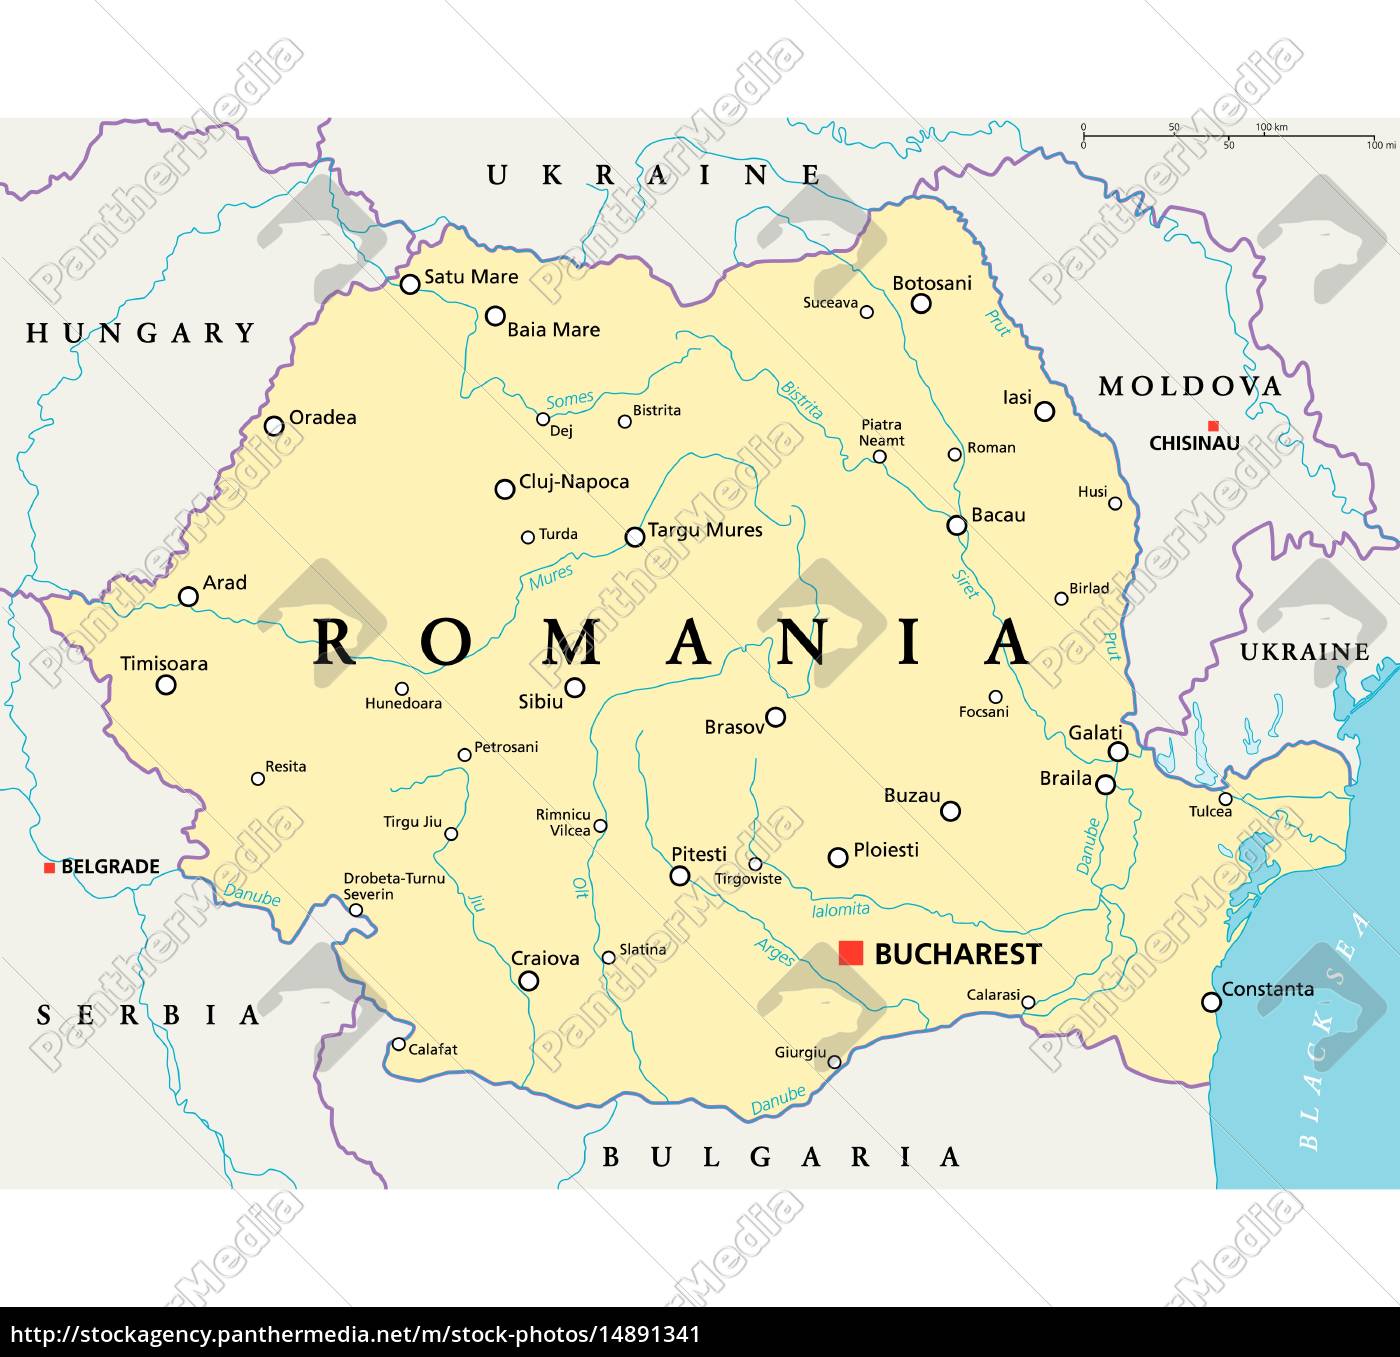 rumänien politische karte - Lizenzfreies Bild - #14891341 | Bildagentur